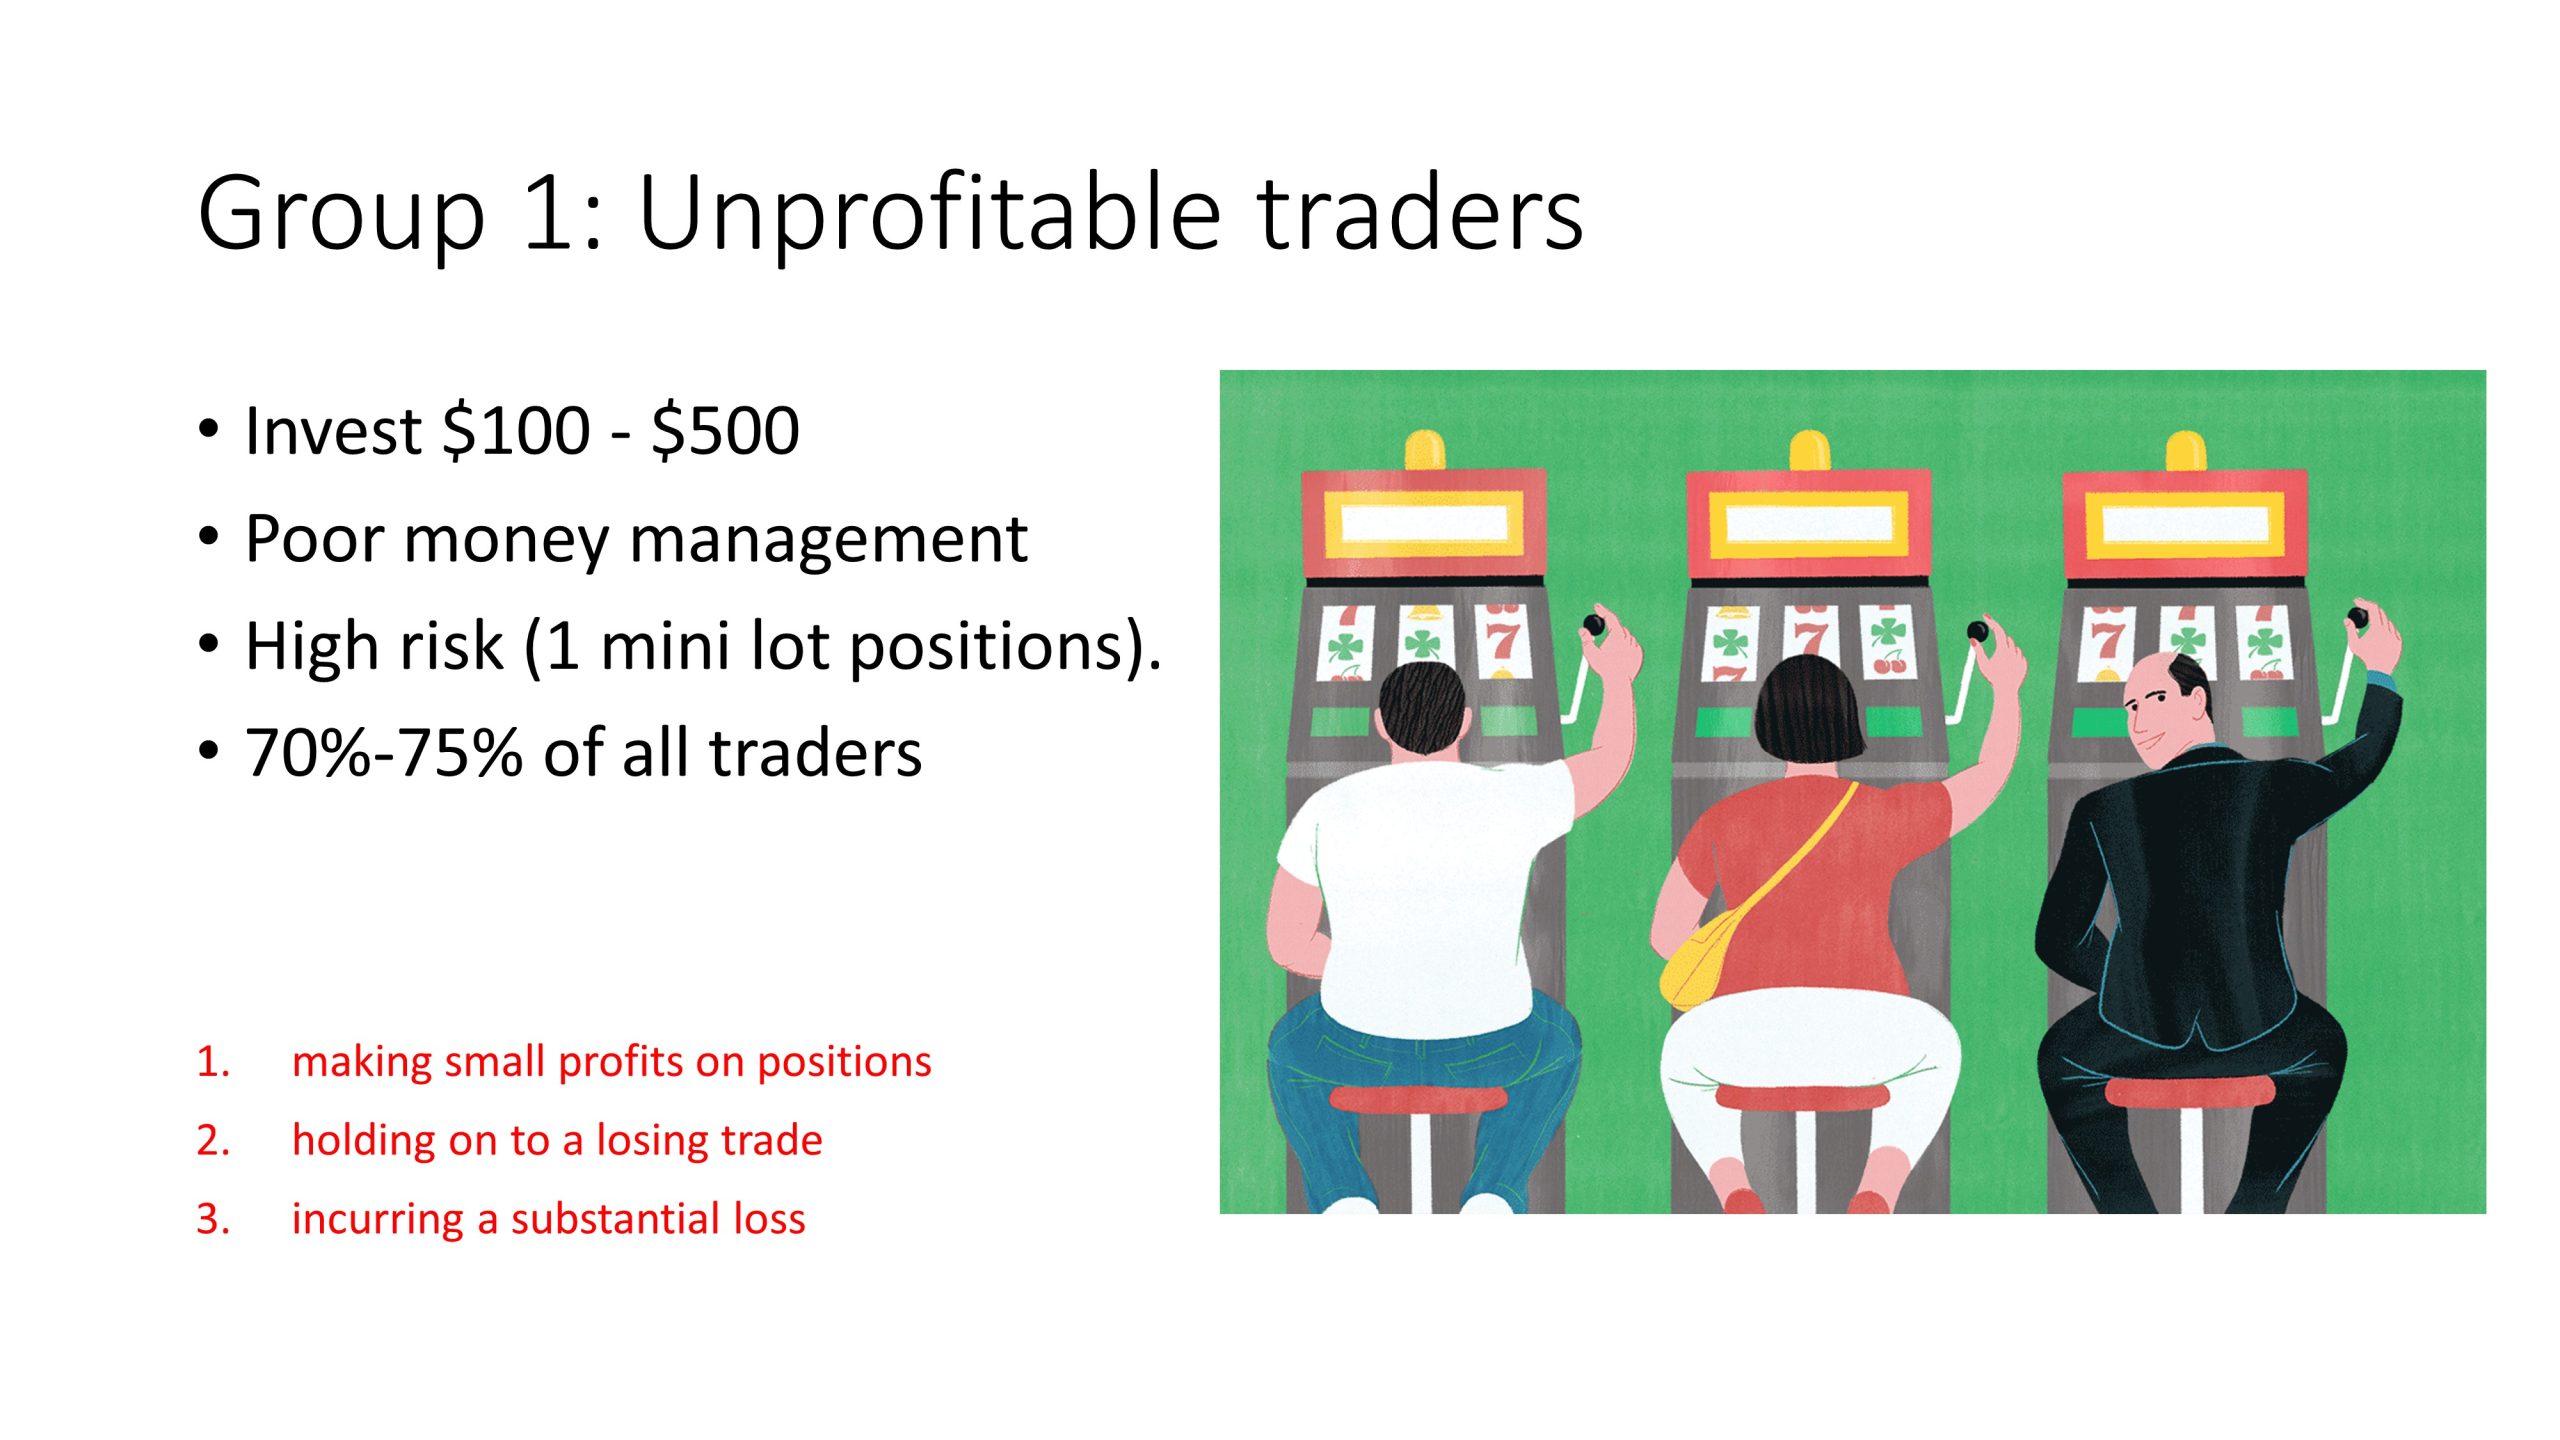 Unprofitable traders